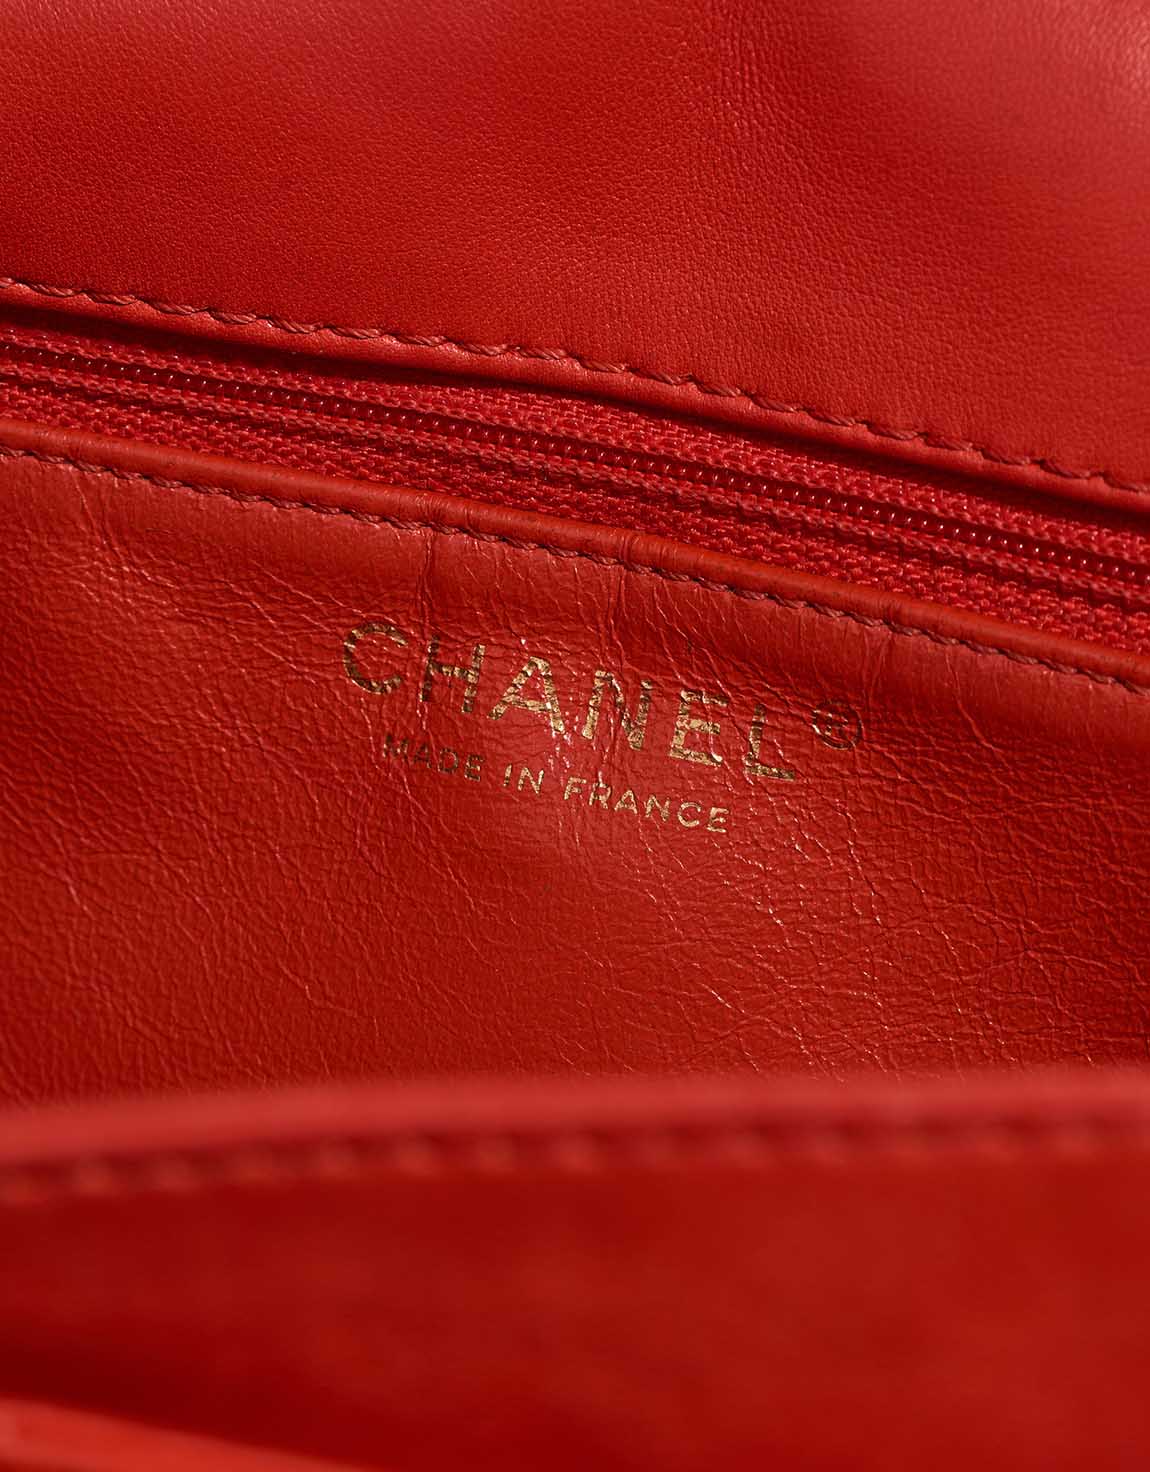 Chanel 2.55 Reissue 225 Patent Red | SACLÀB